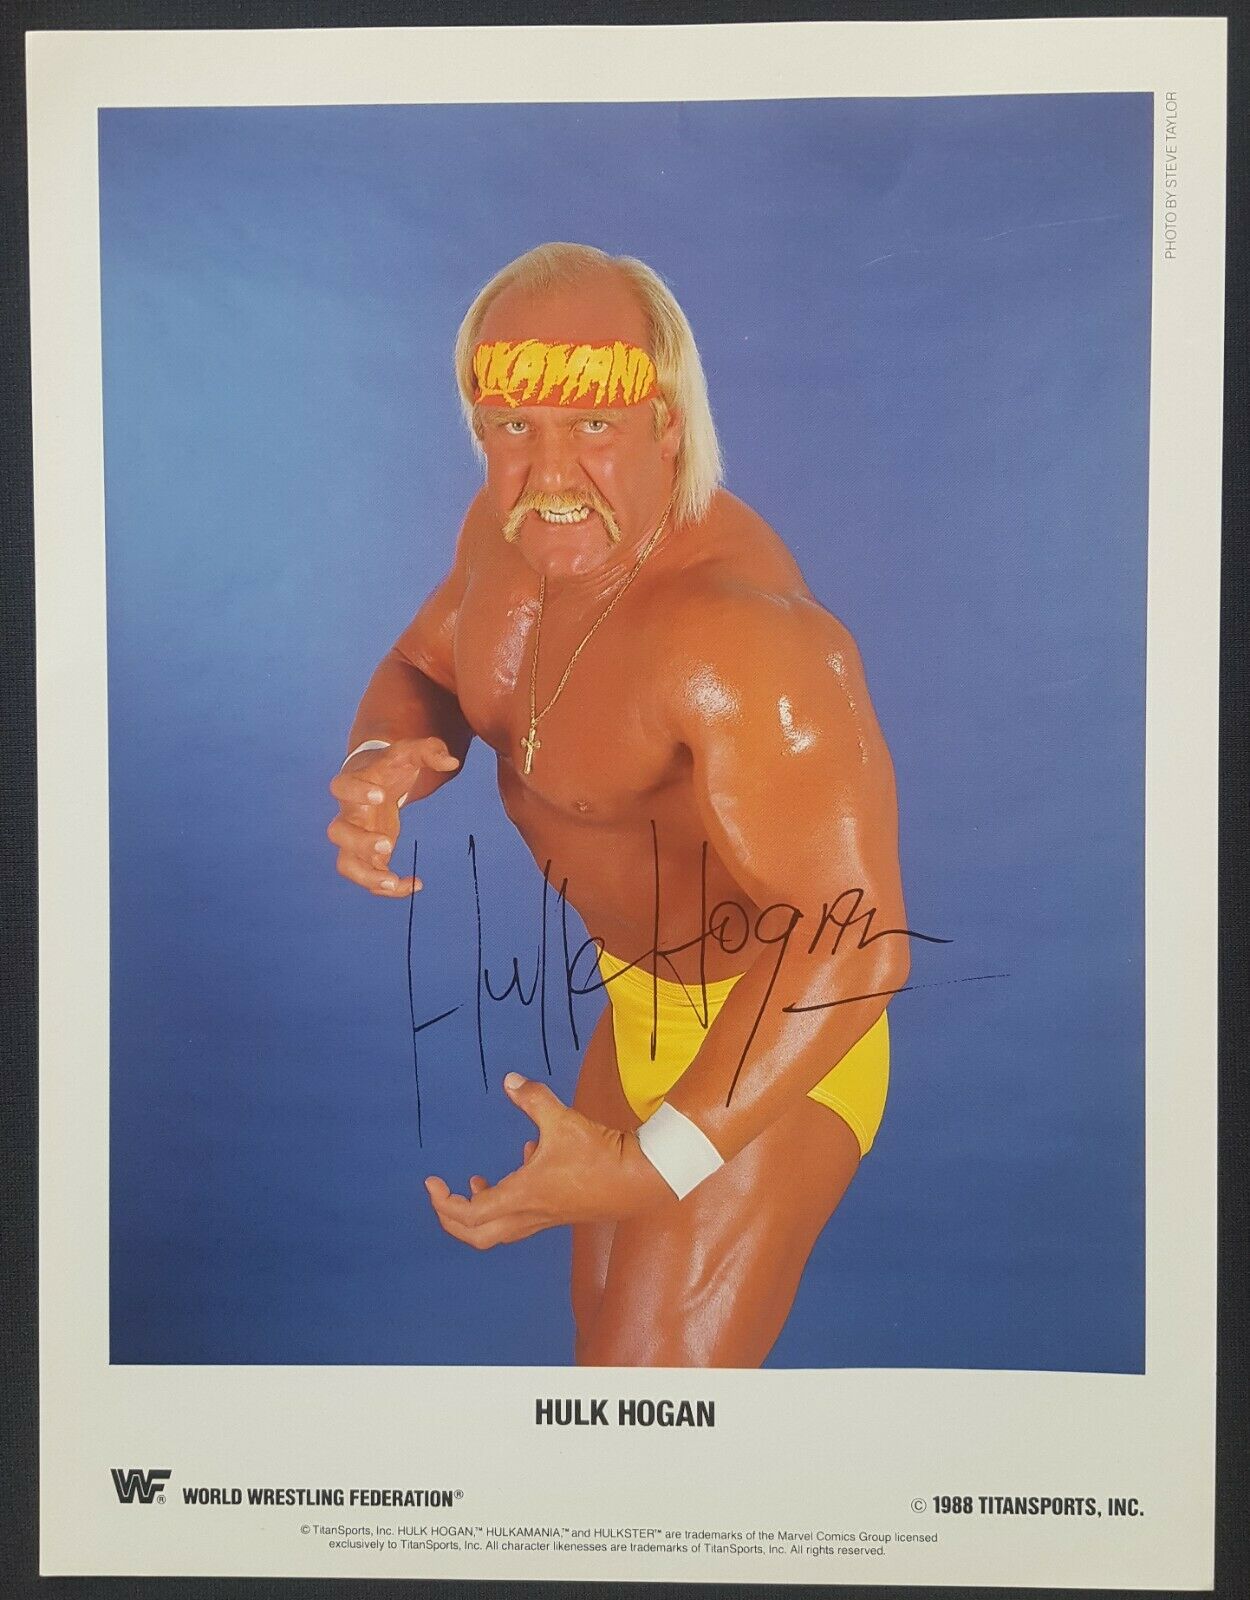 Hulk Hogan Signed Vintage Photograph From 1988 By Steve Taylor & TitanSports